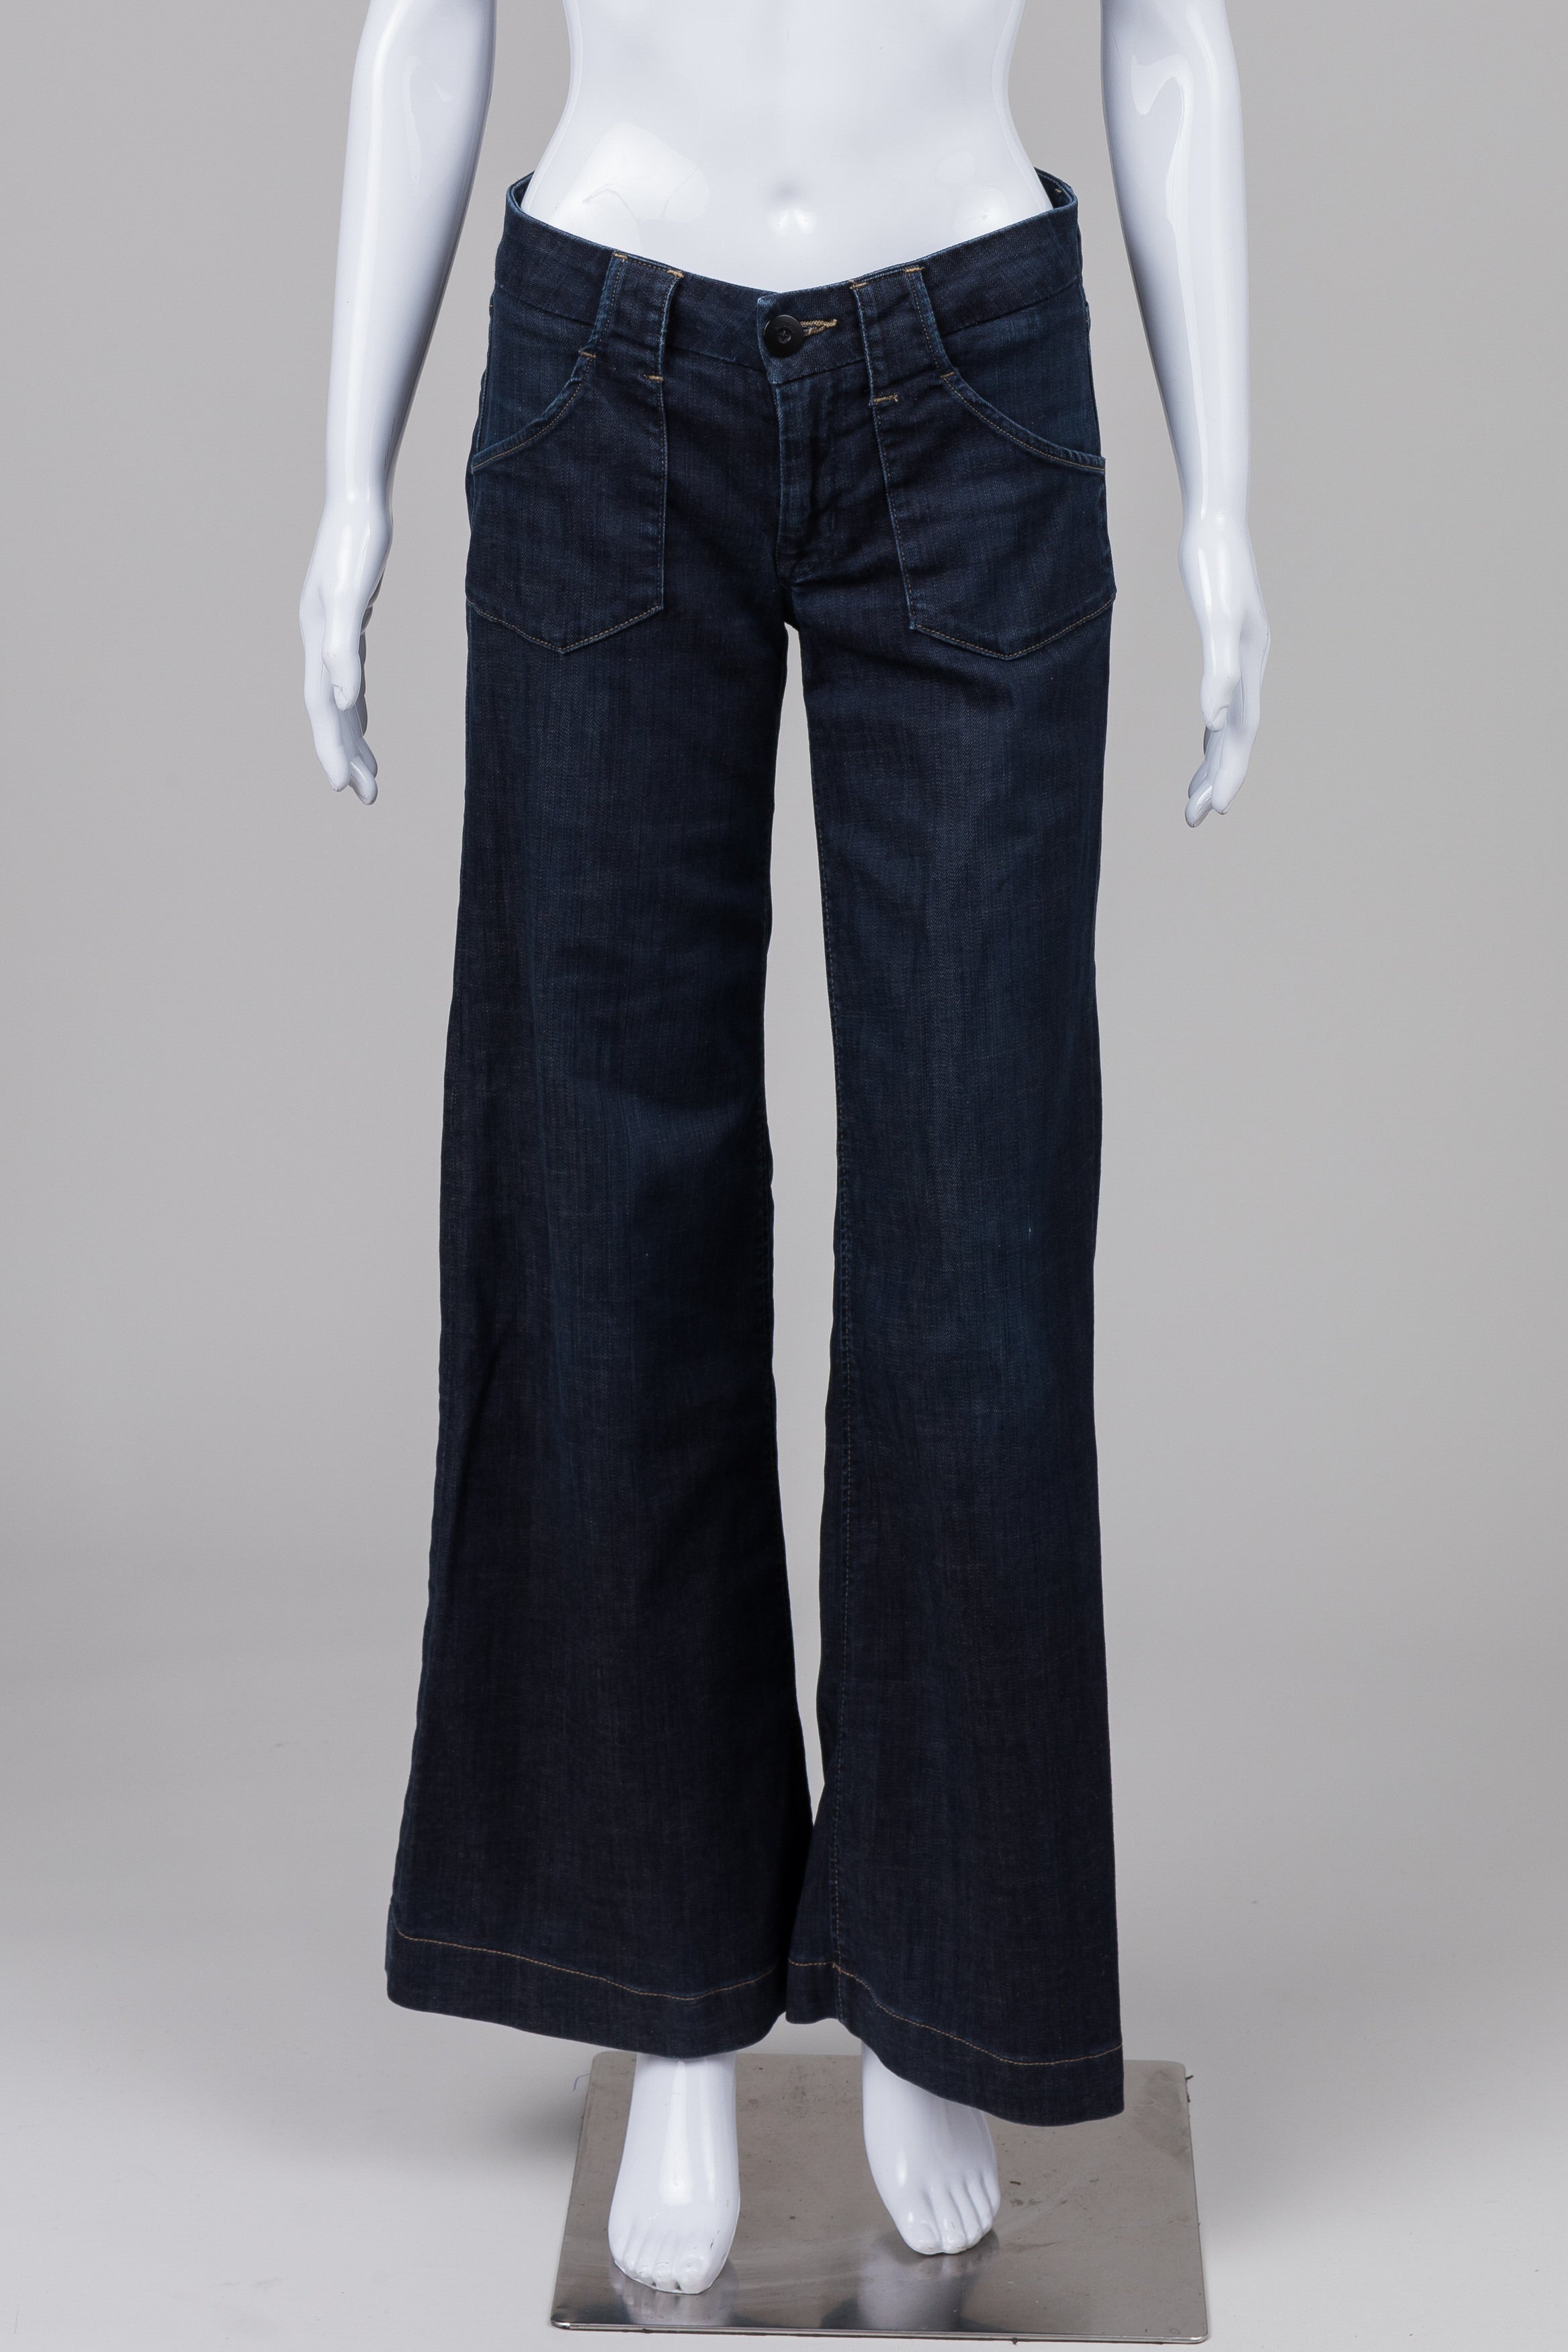 Hudson Flare Jeans (27)